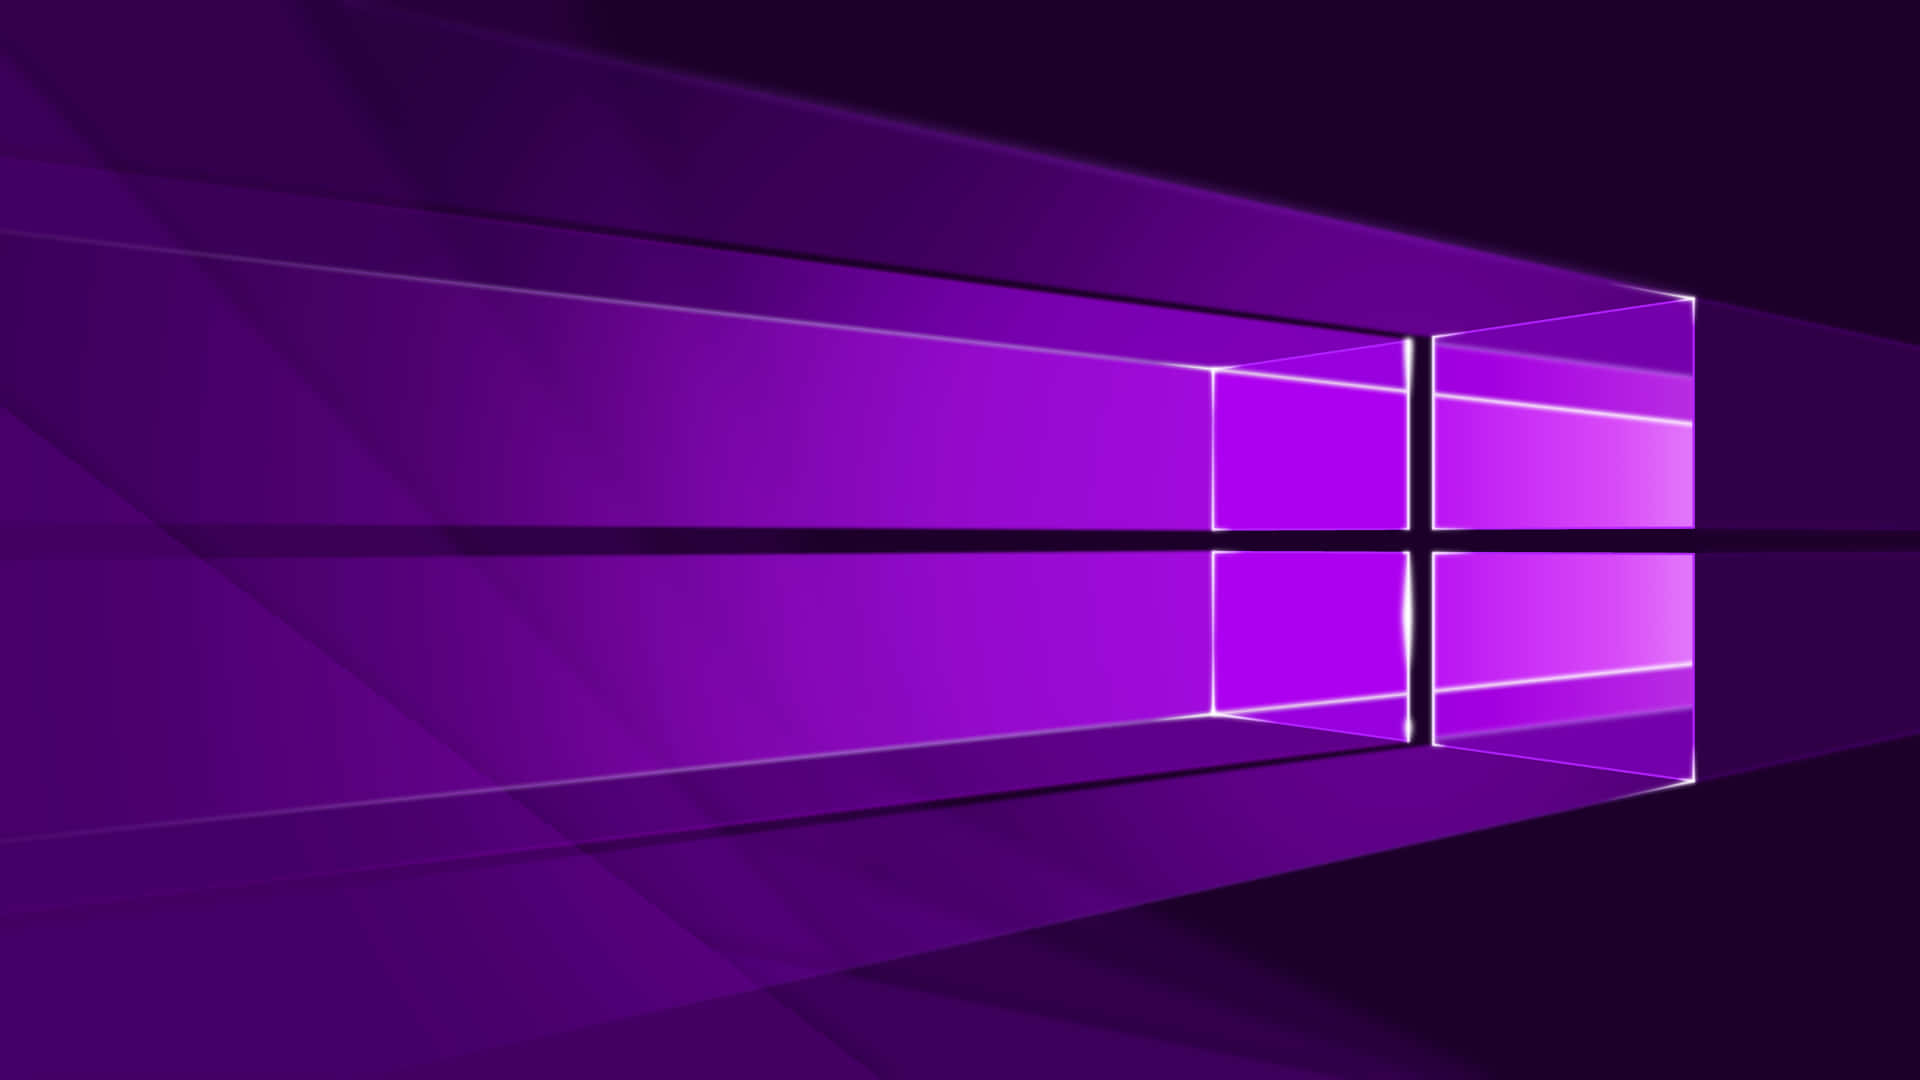 High Definition Visuals in Windows 10